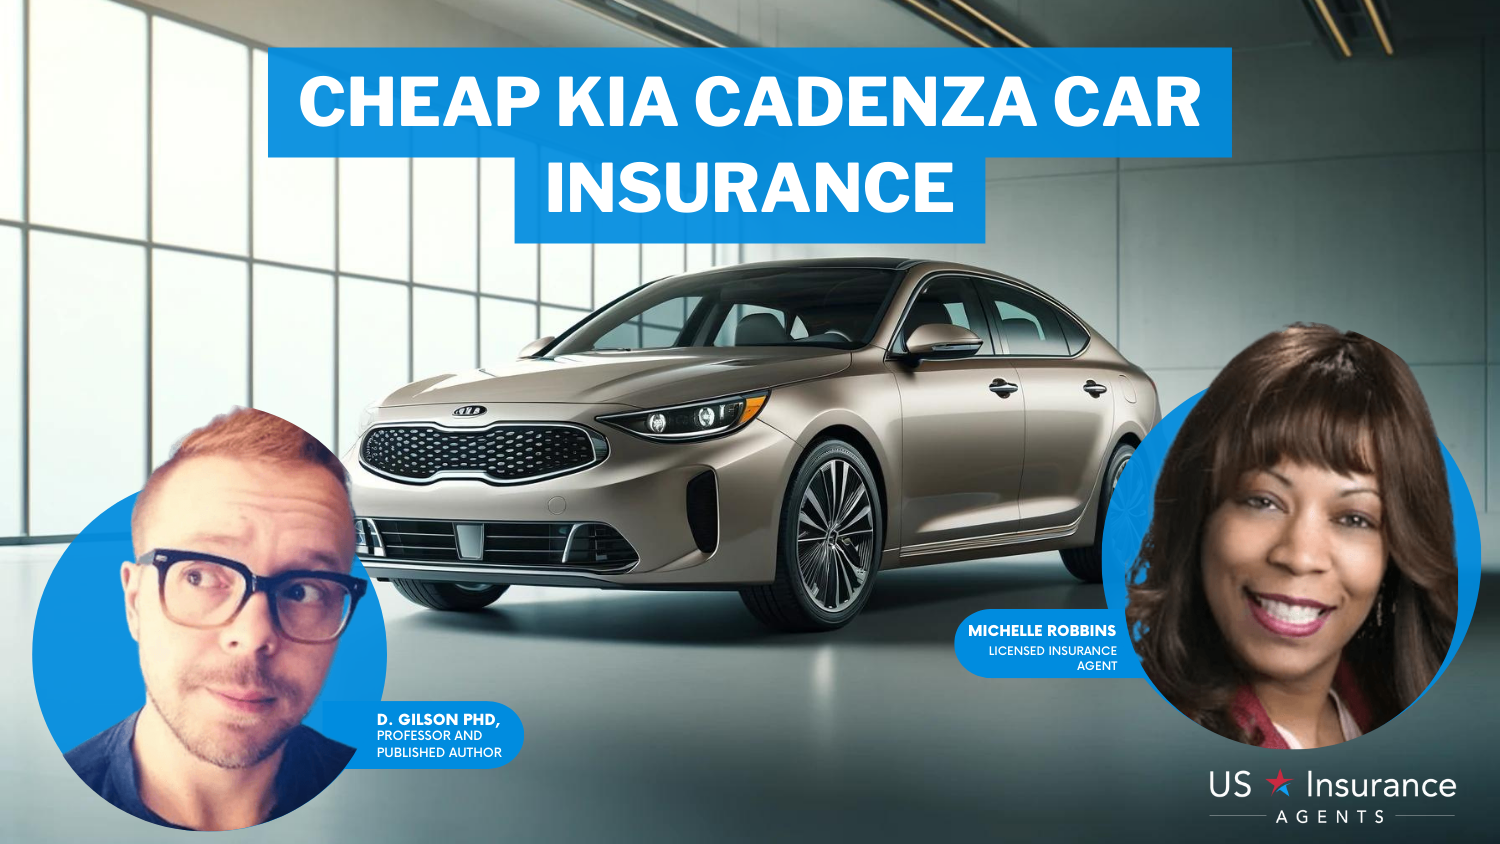 Erie, Nationwide, Travelers: Cheap Kia Cadenza Car Insurance